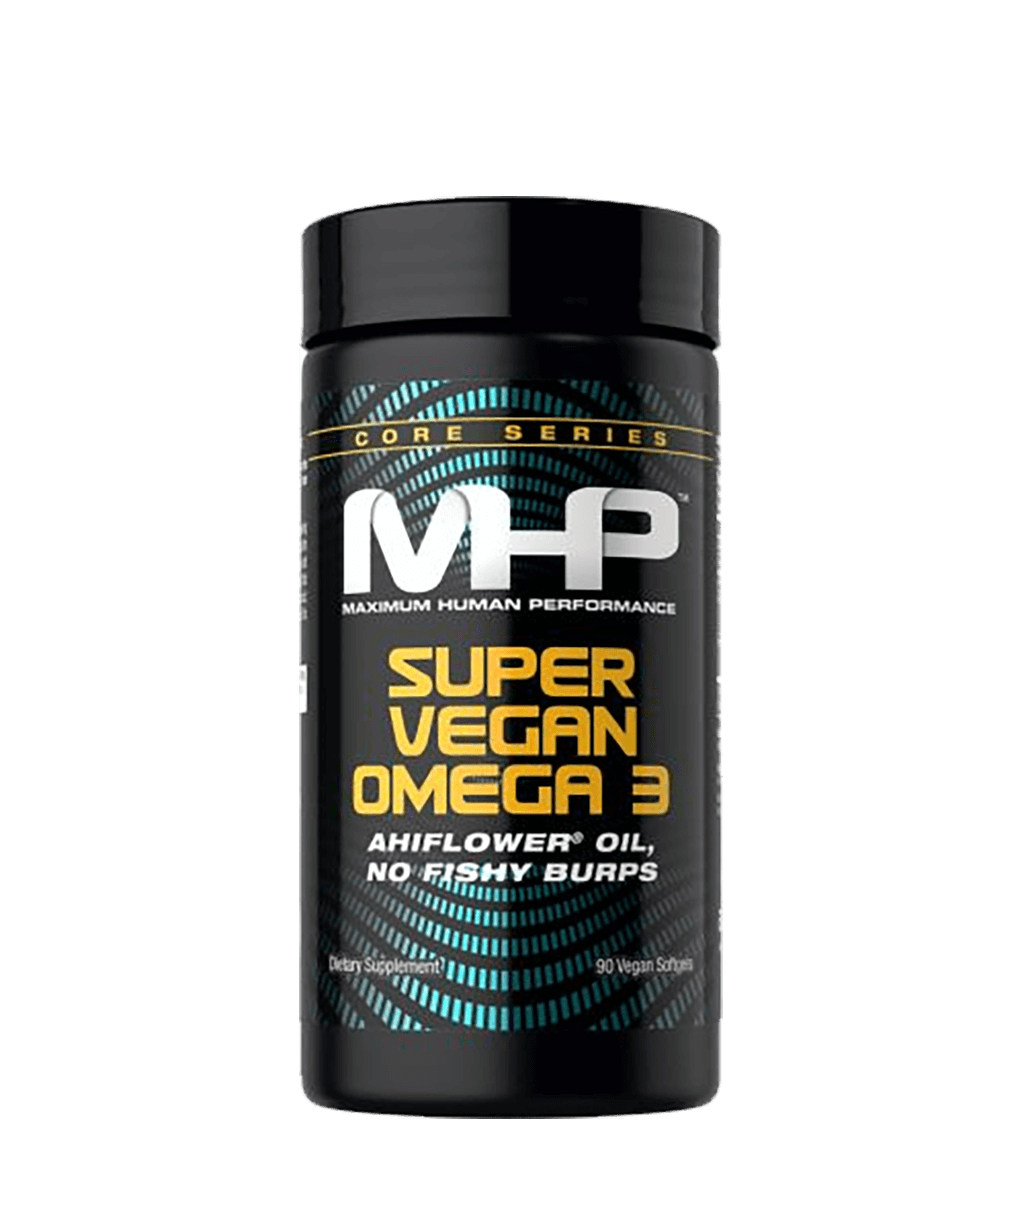 Super Vegan Omega 3